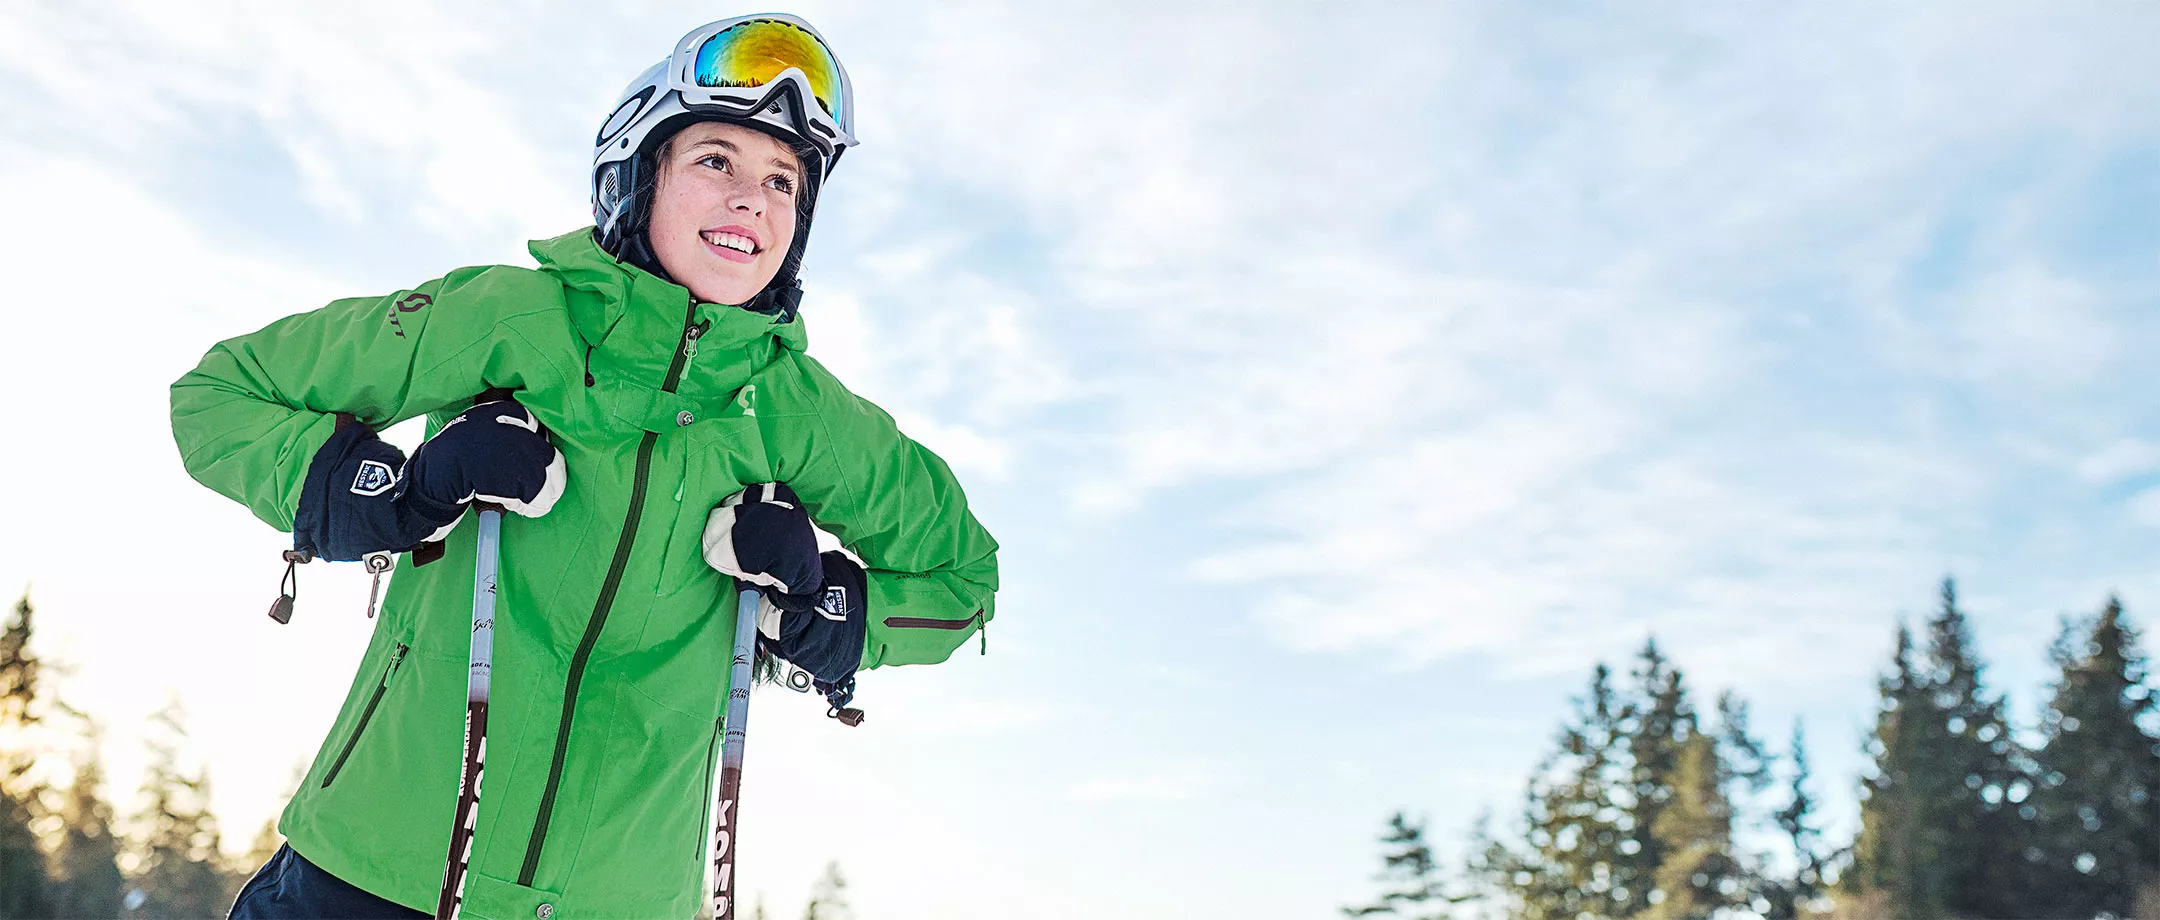 Isaberg Ski resort in Sweden, Europe | Snowboarding,Skiing - Rated 3.5